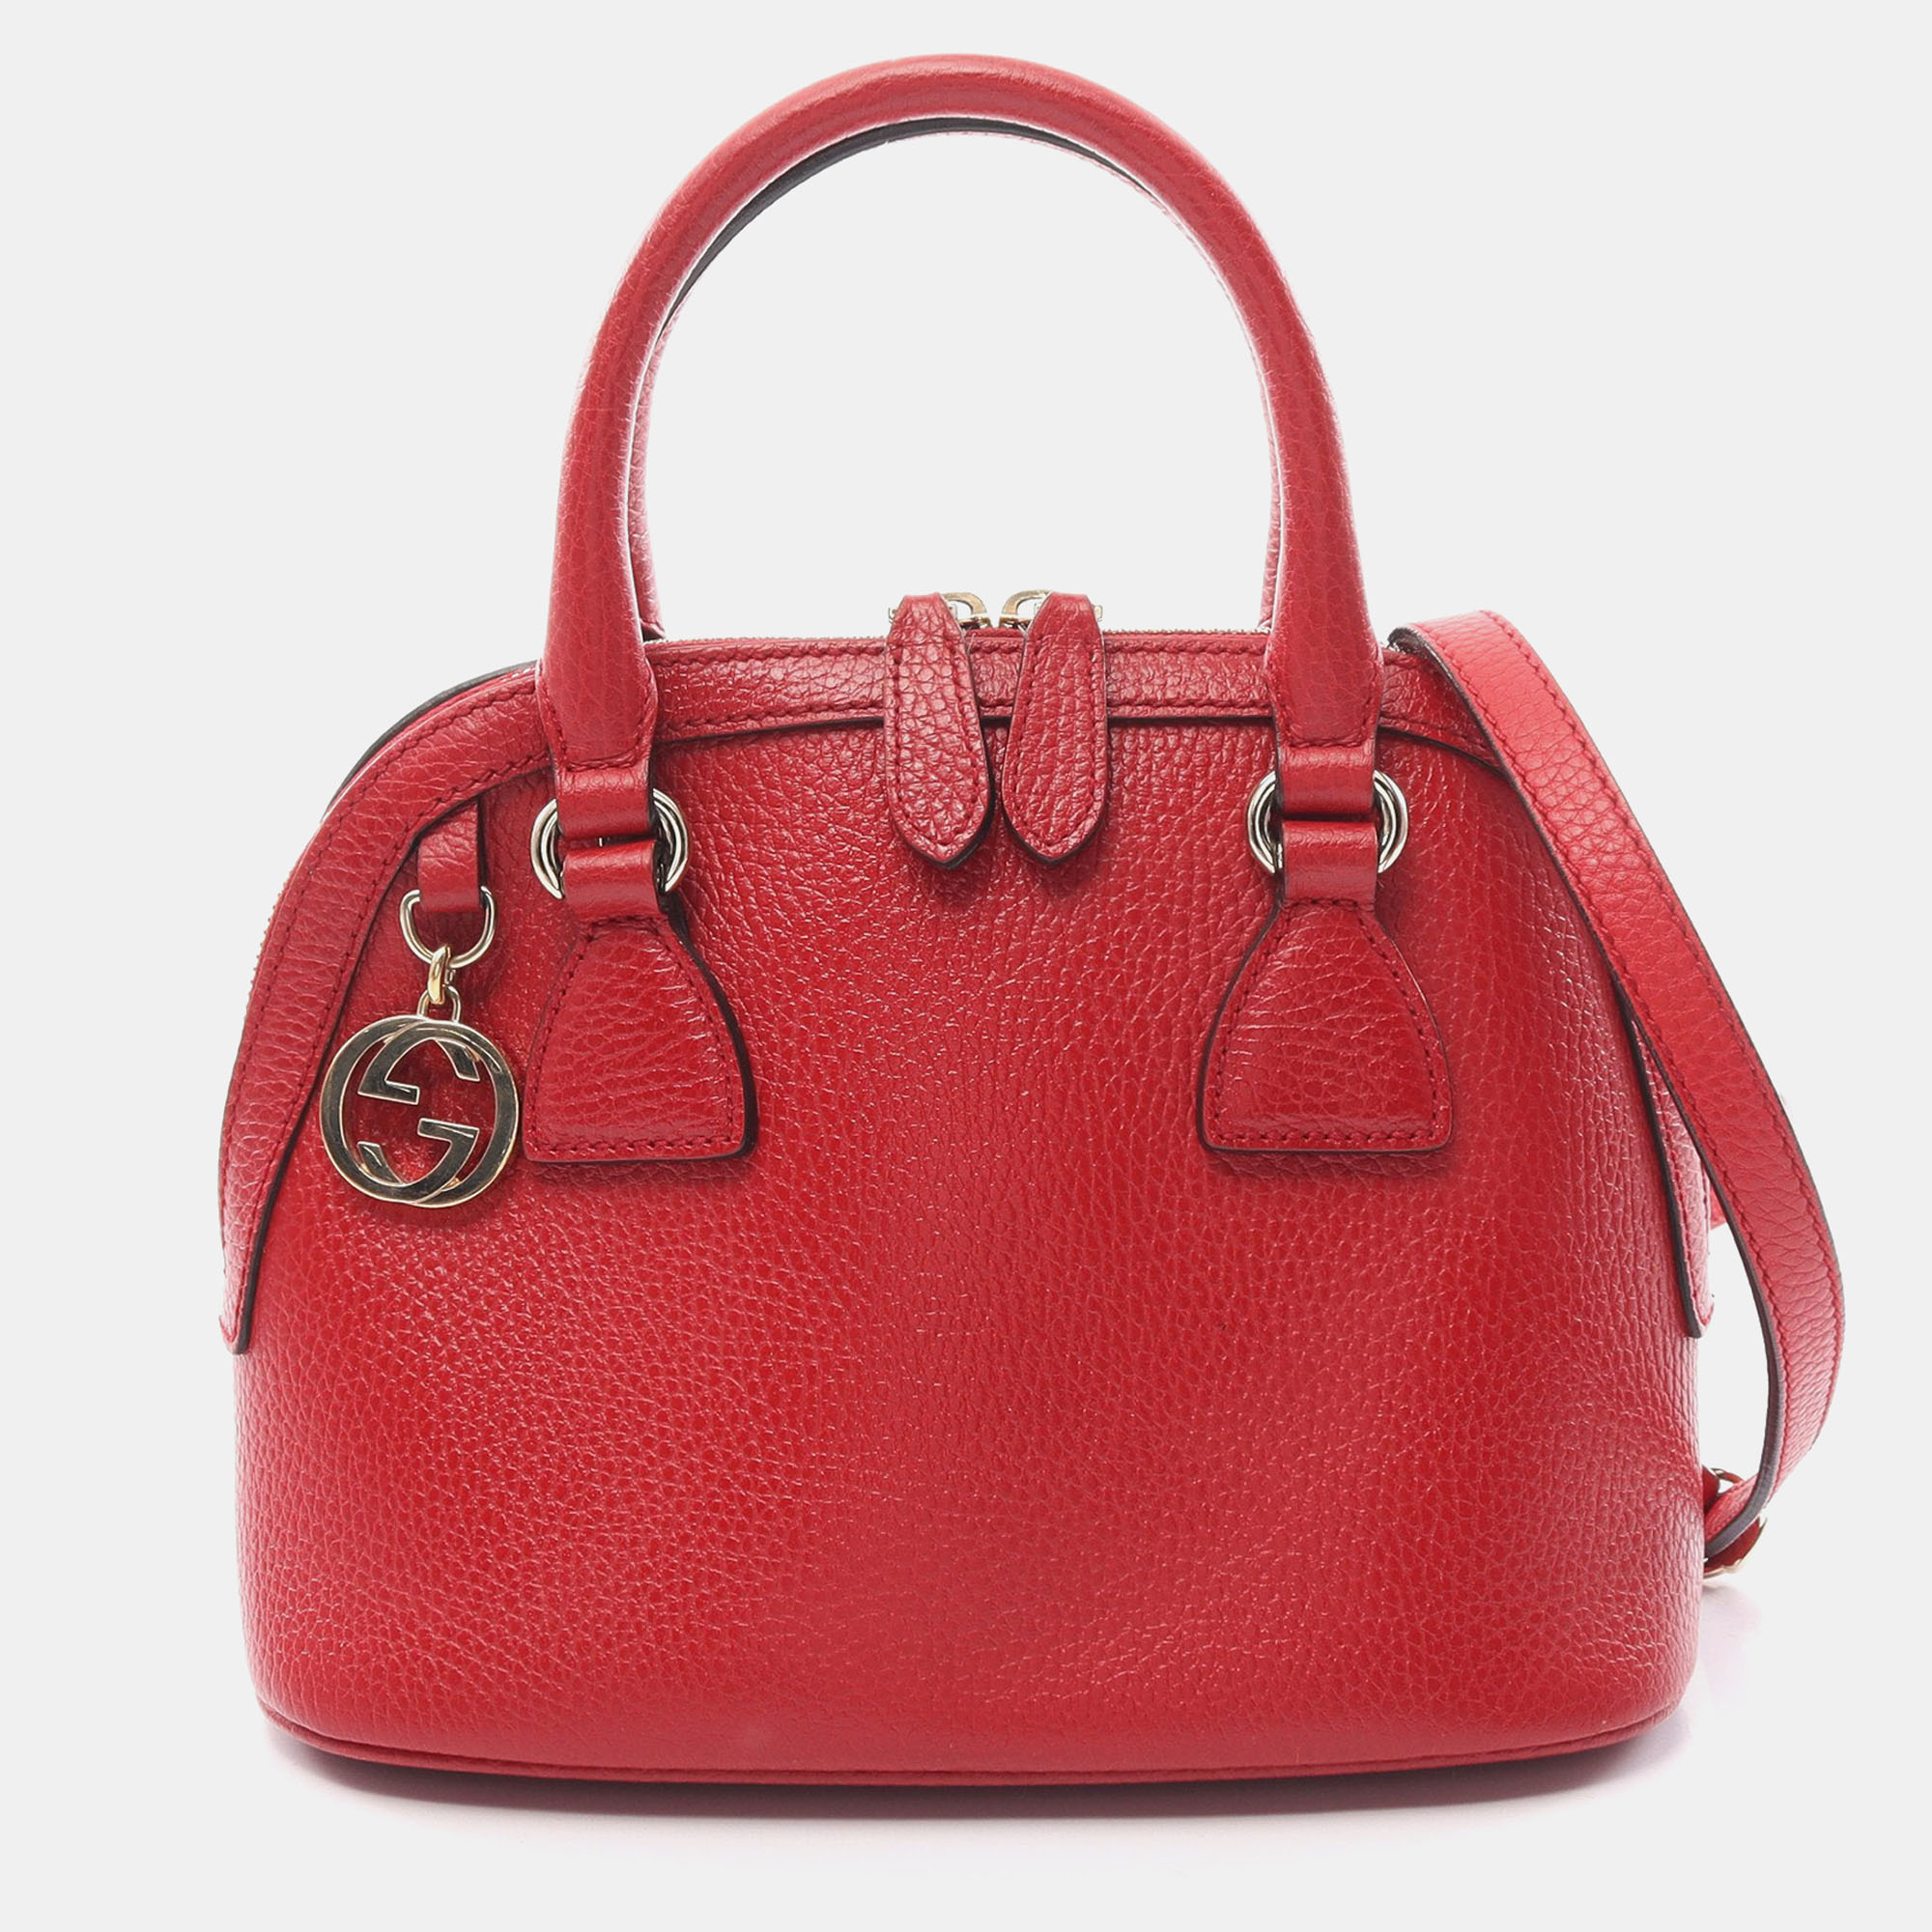 Pre-owned Gucci Interlocking G Handbag Leather Red 2way